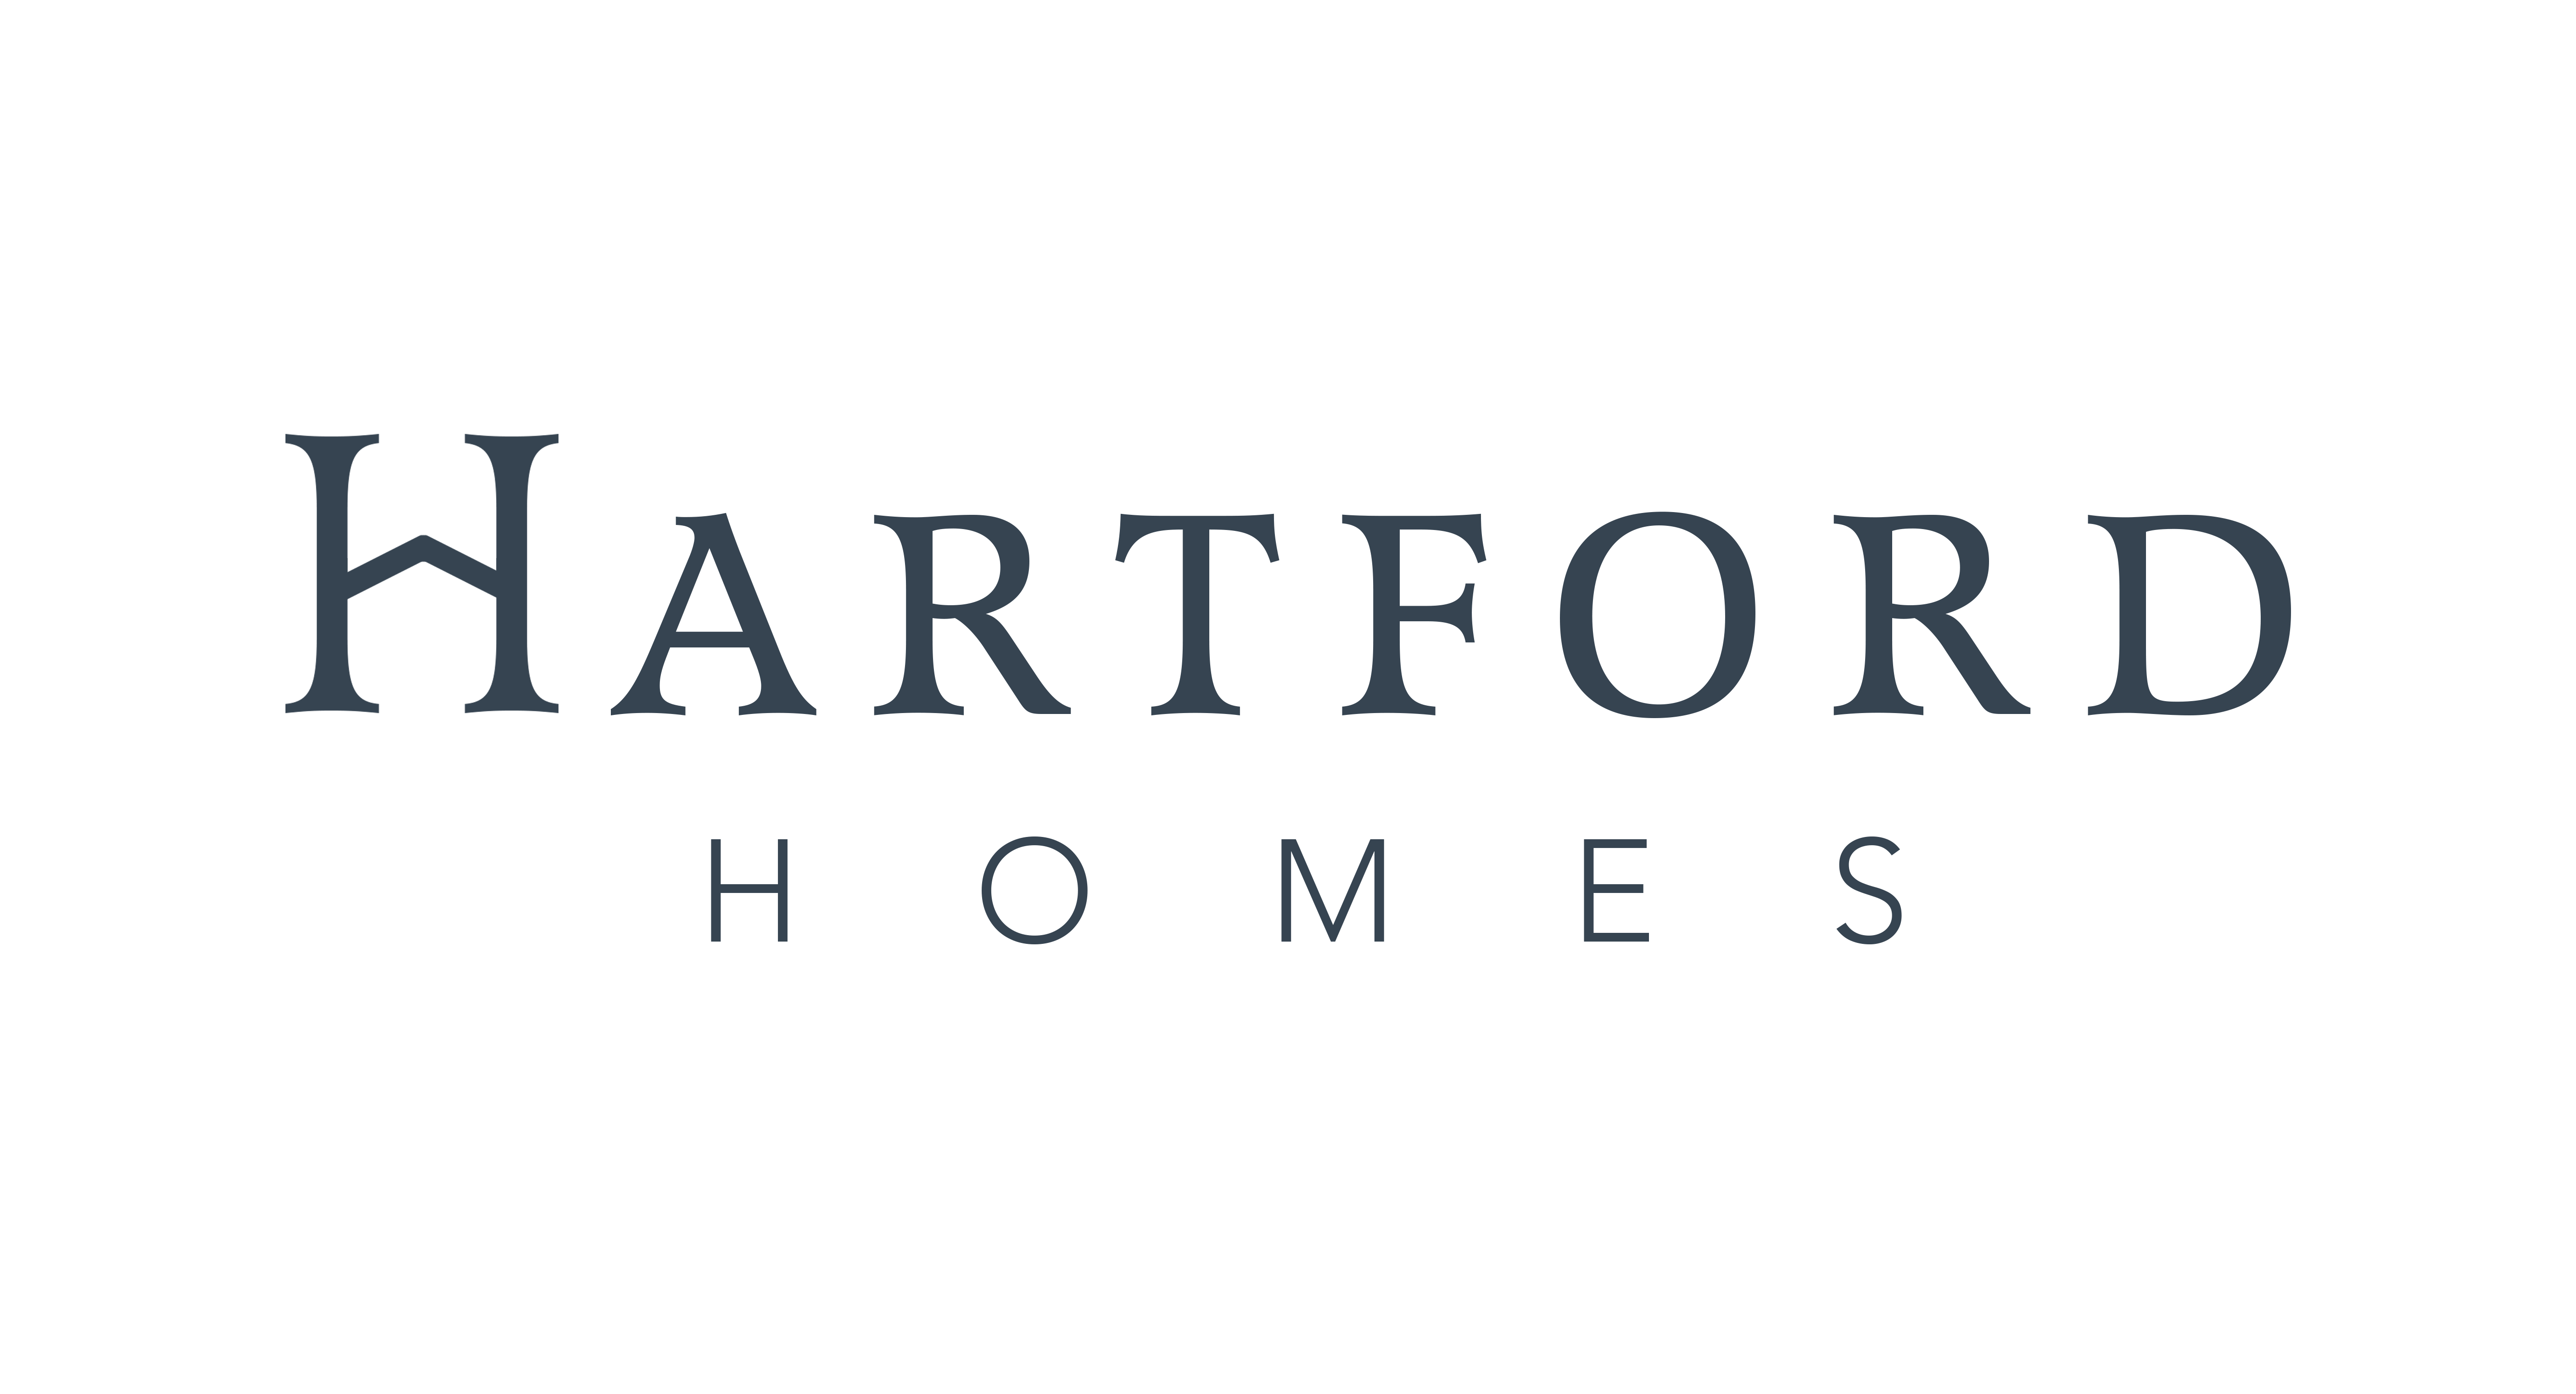 Hartford Homes